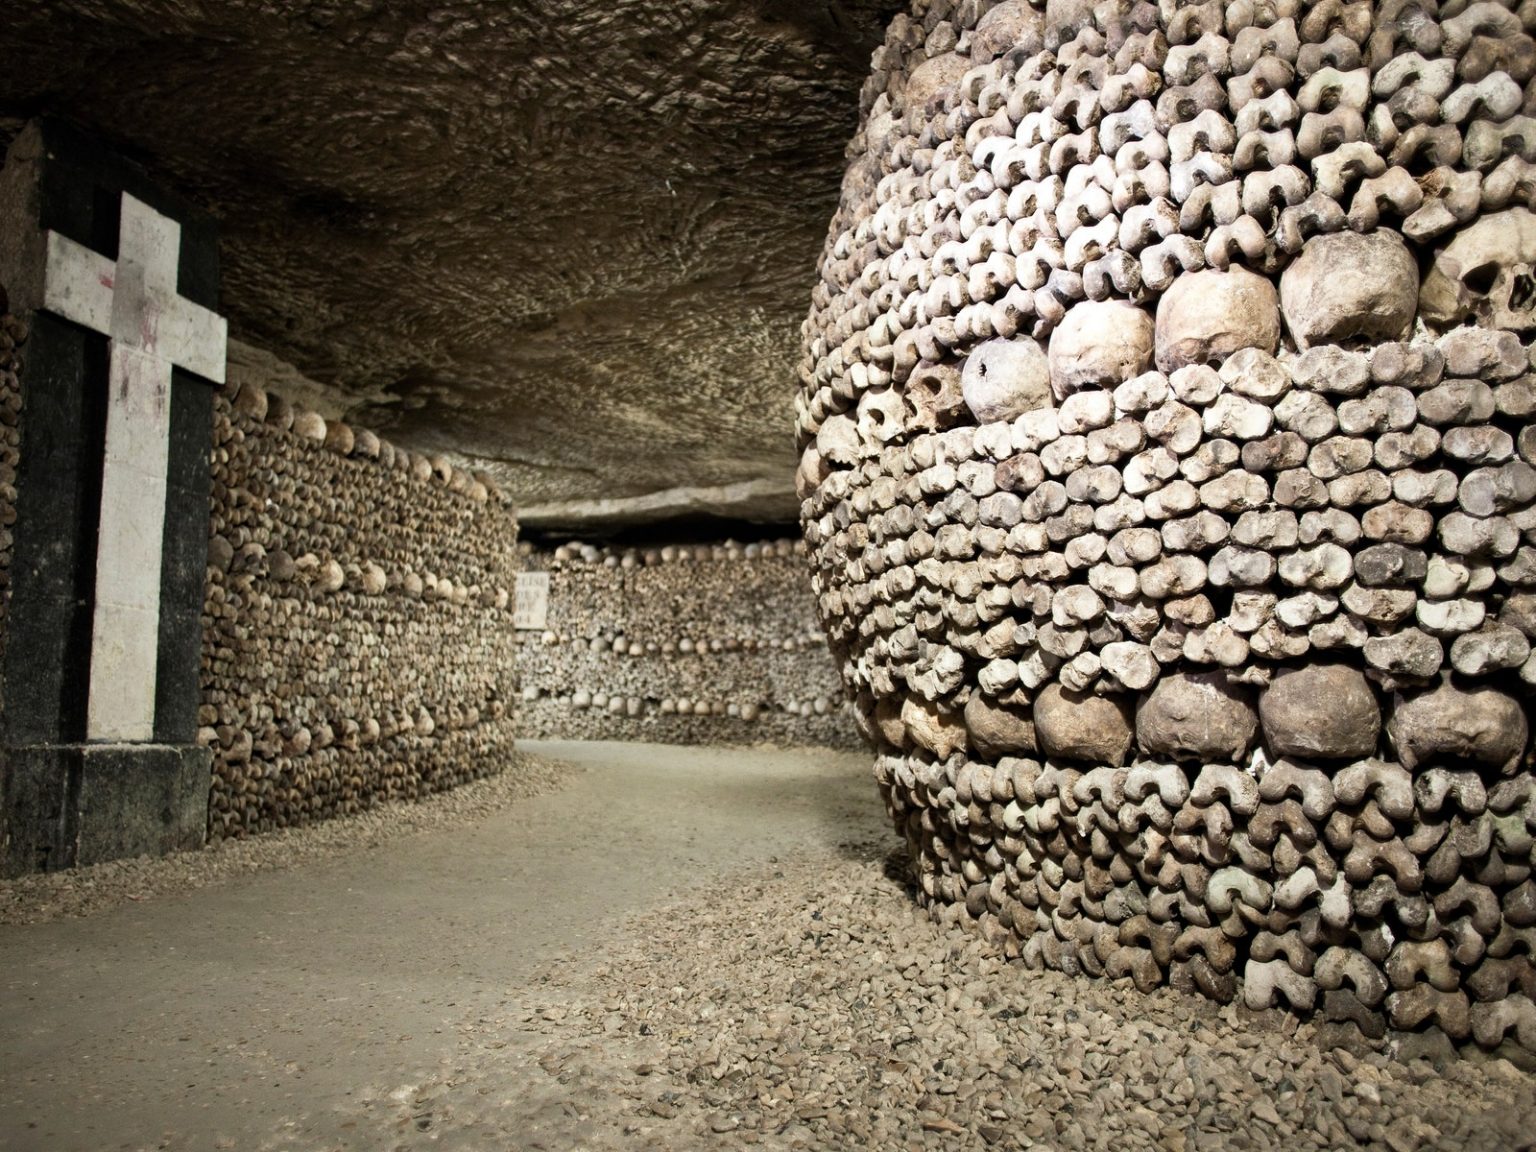 paris-catacombs-the-bones-of-over-6-million-souls-under-the-city